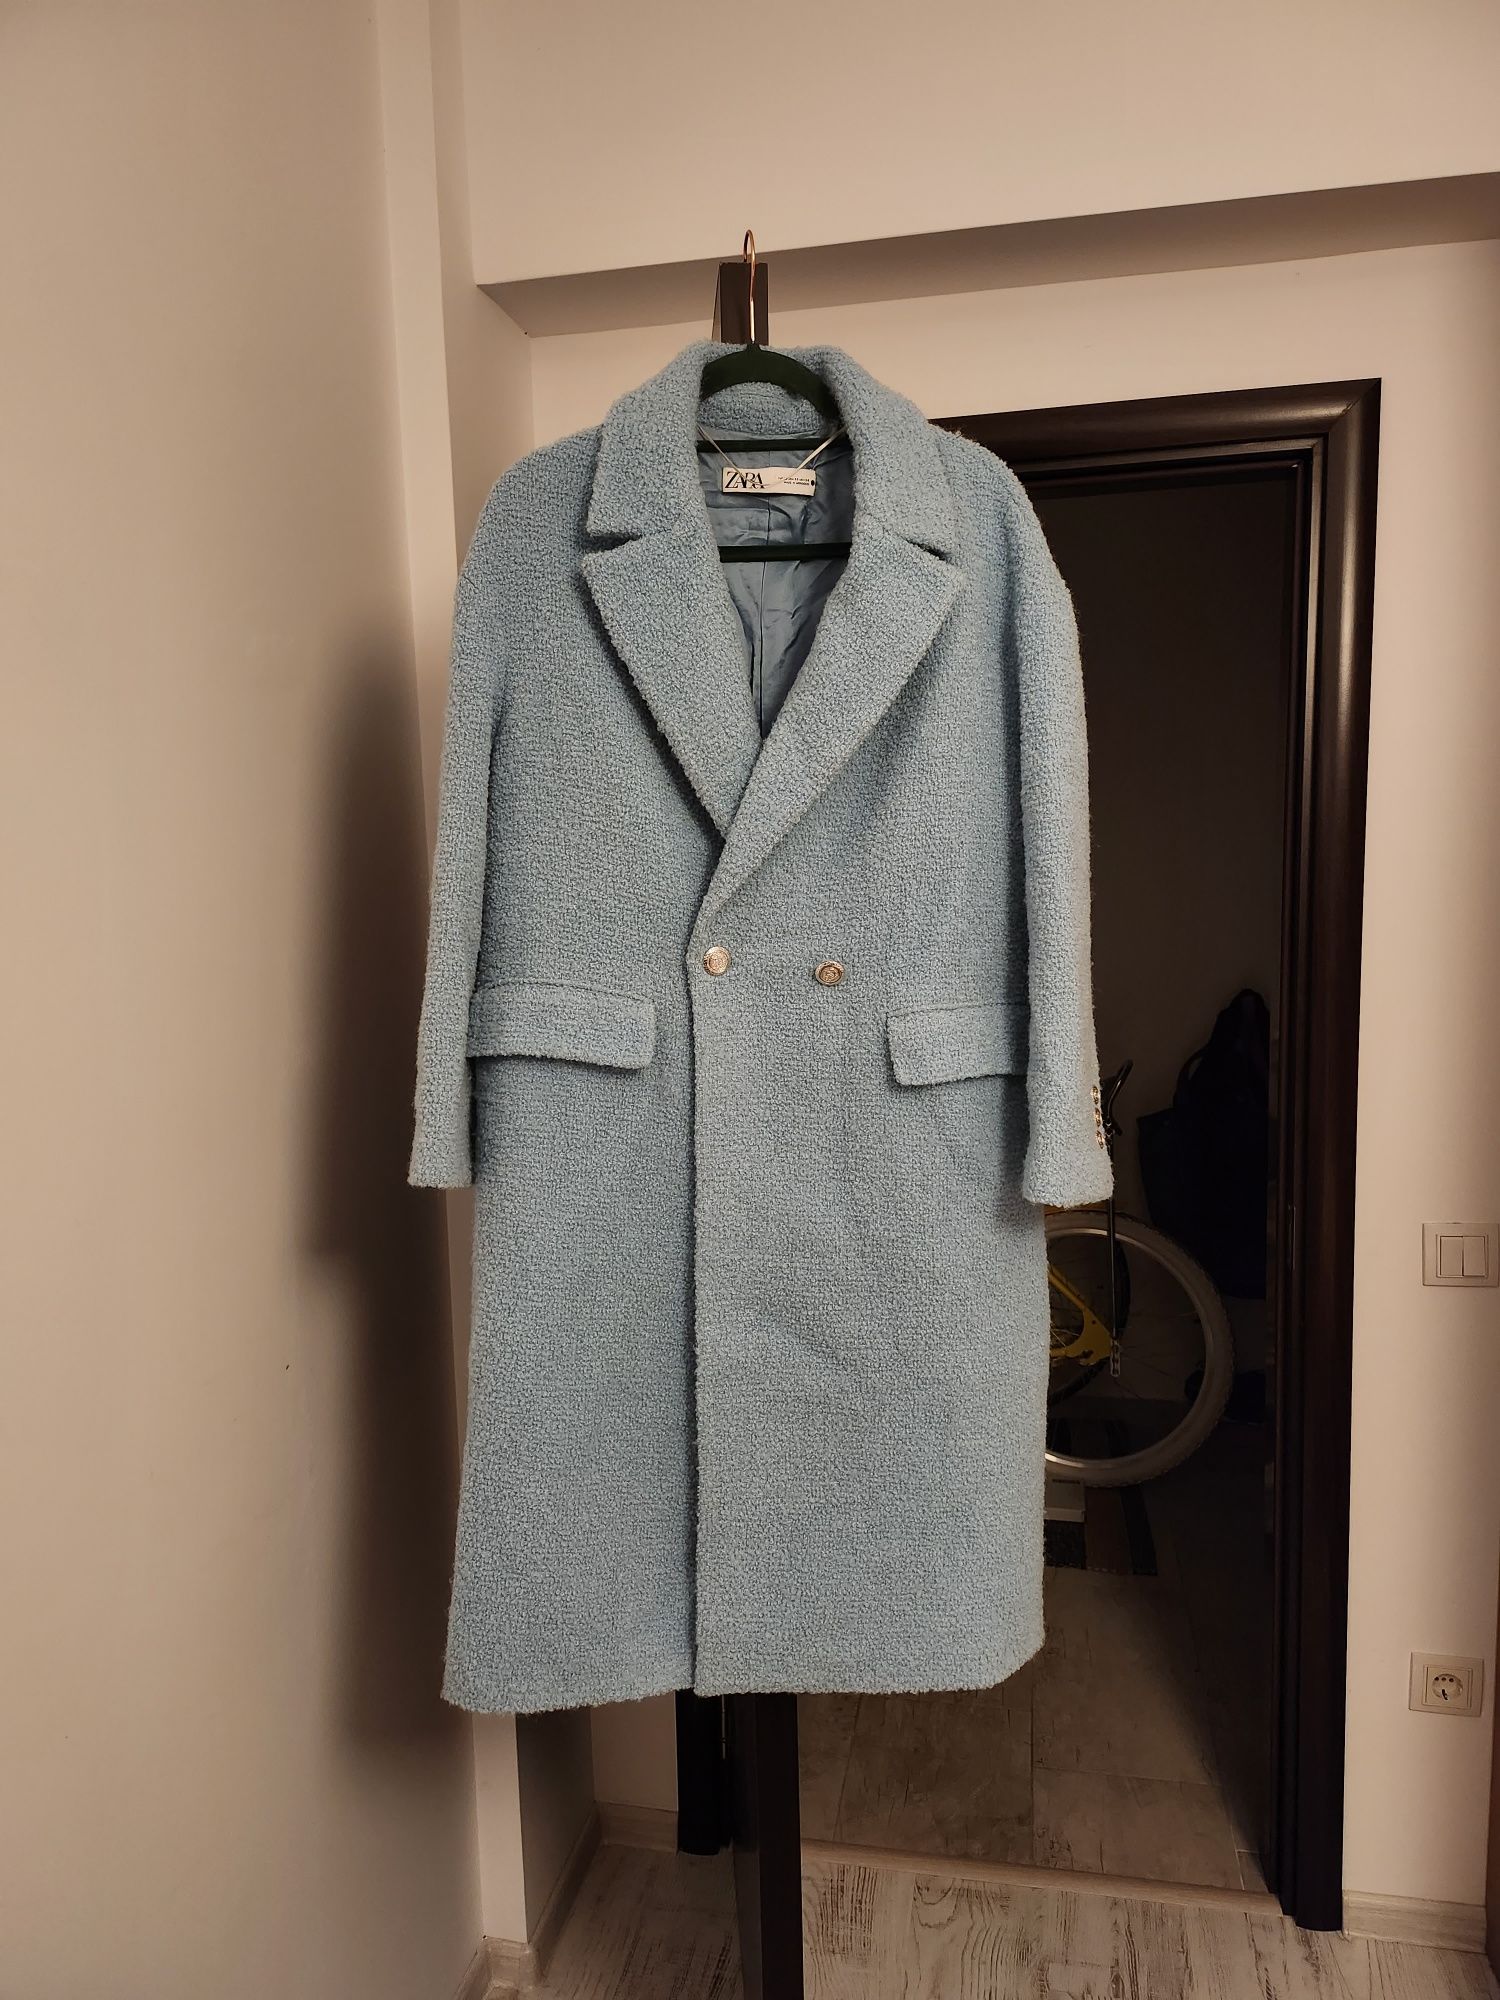 Palton Zara limited edition